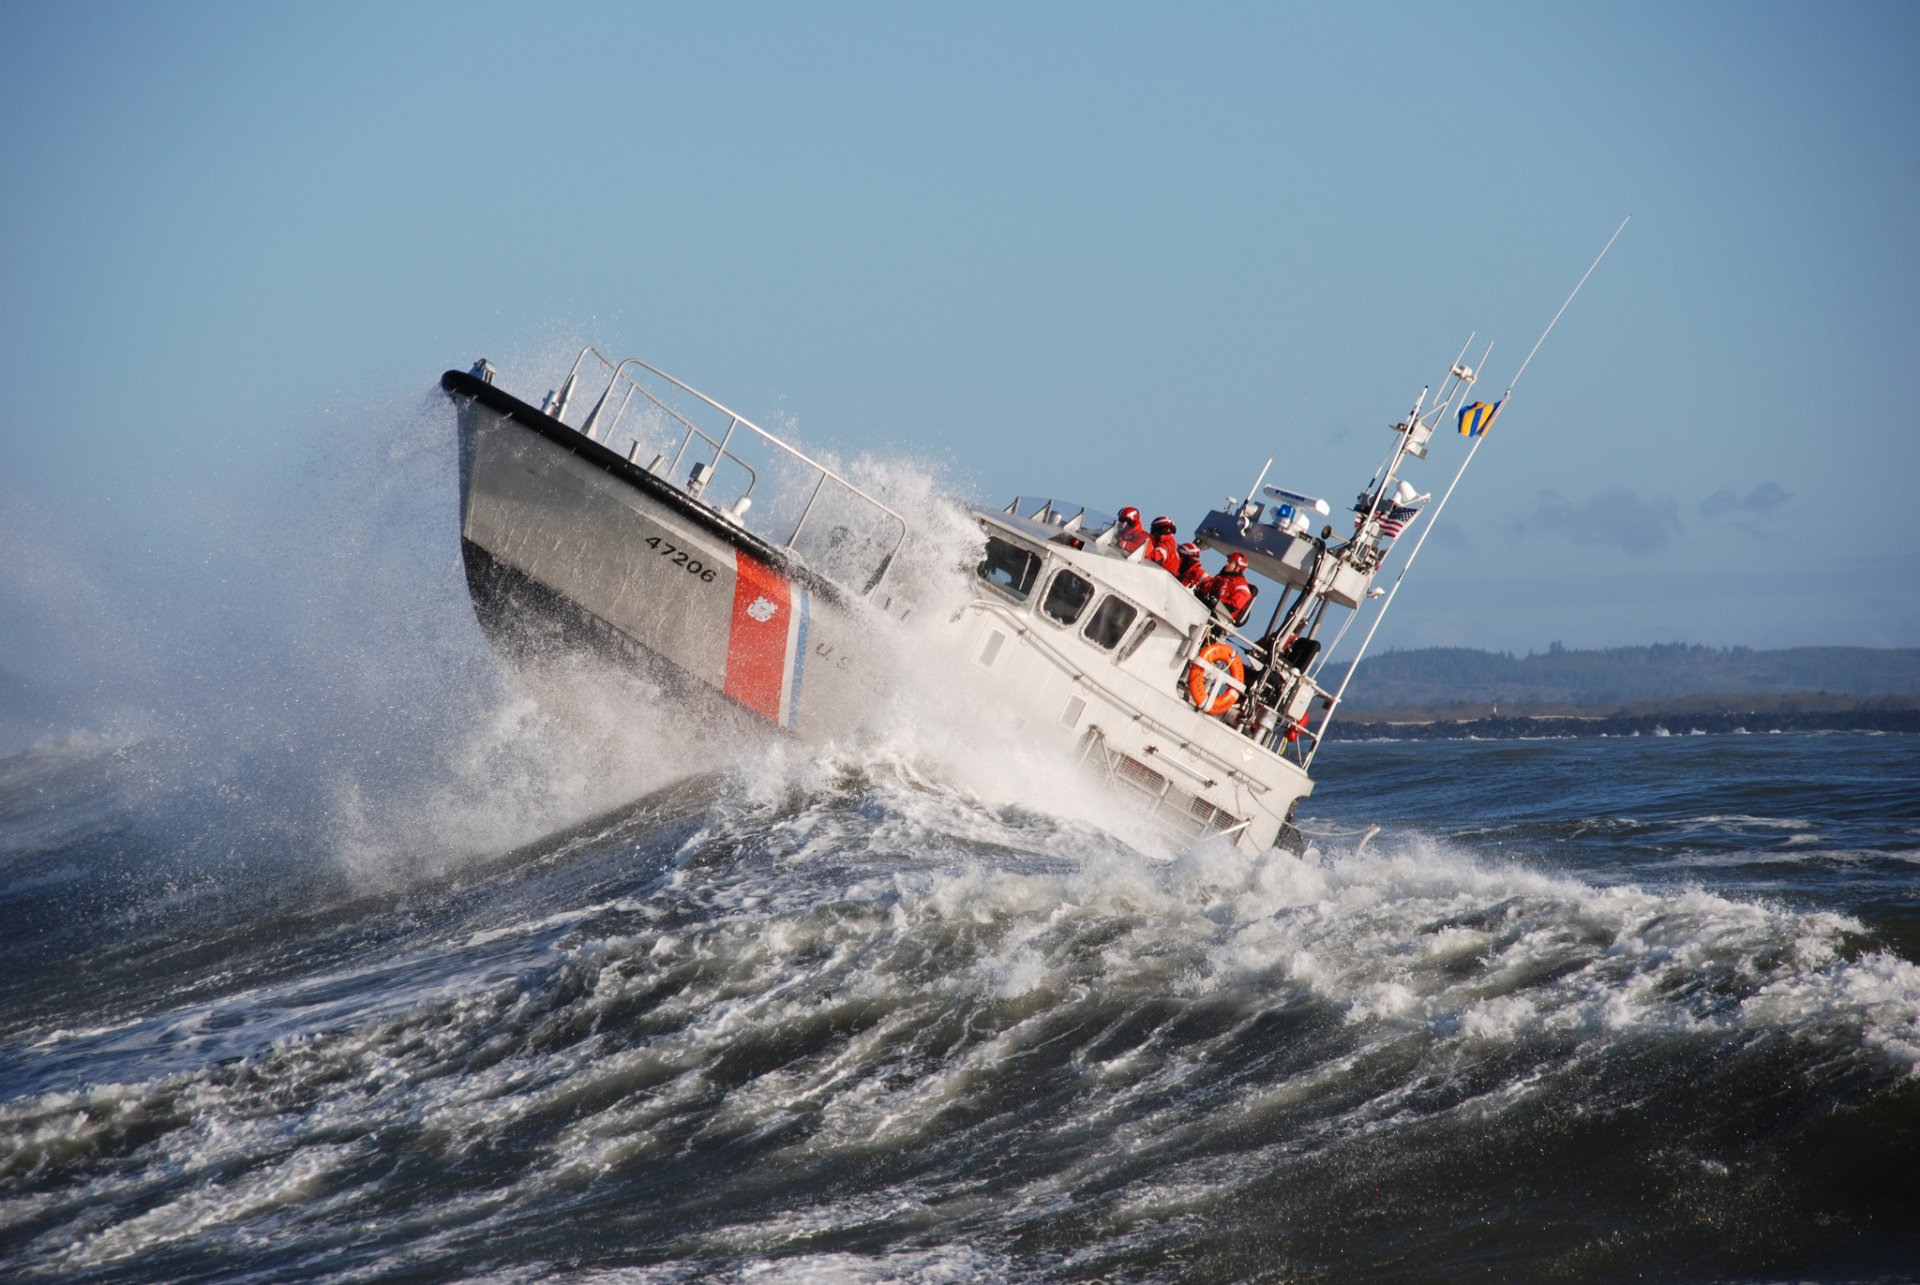 2048x1371 United States Coast Guard (USCG) by Jamie Thielen Wallpaper Backg...